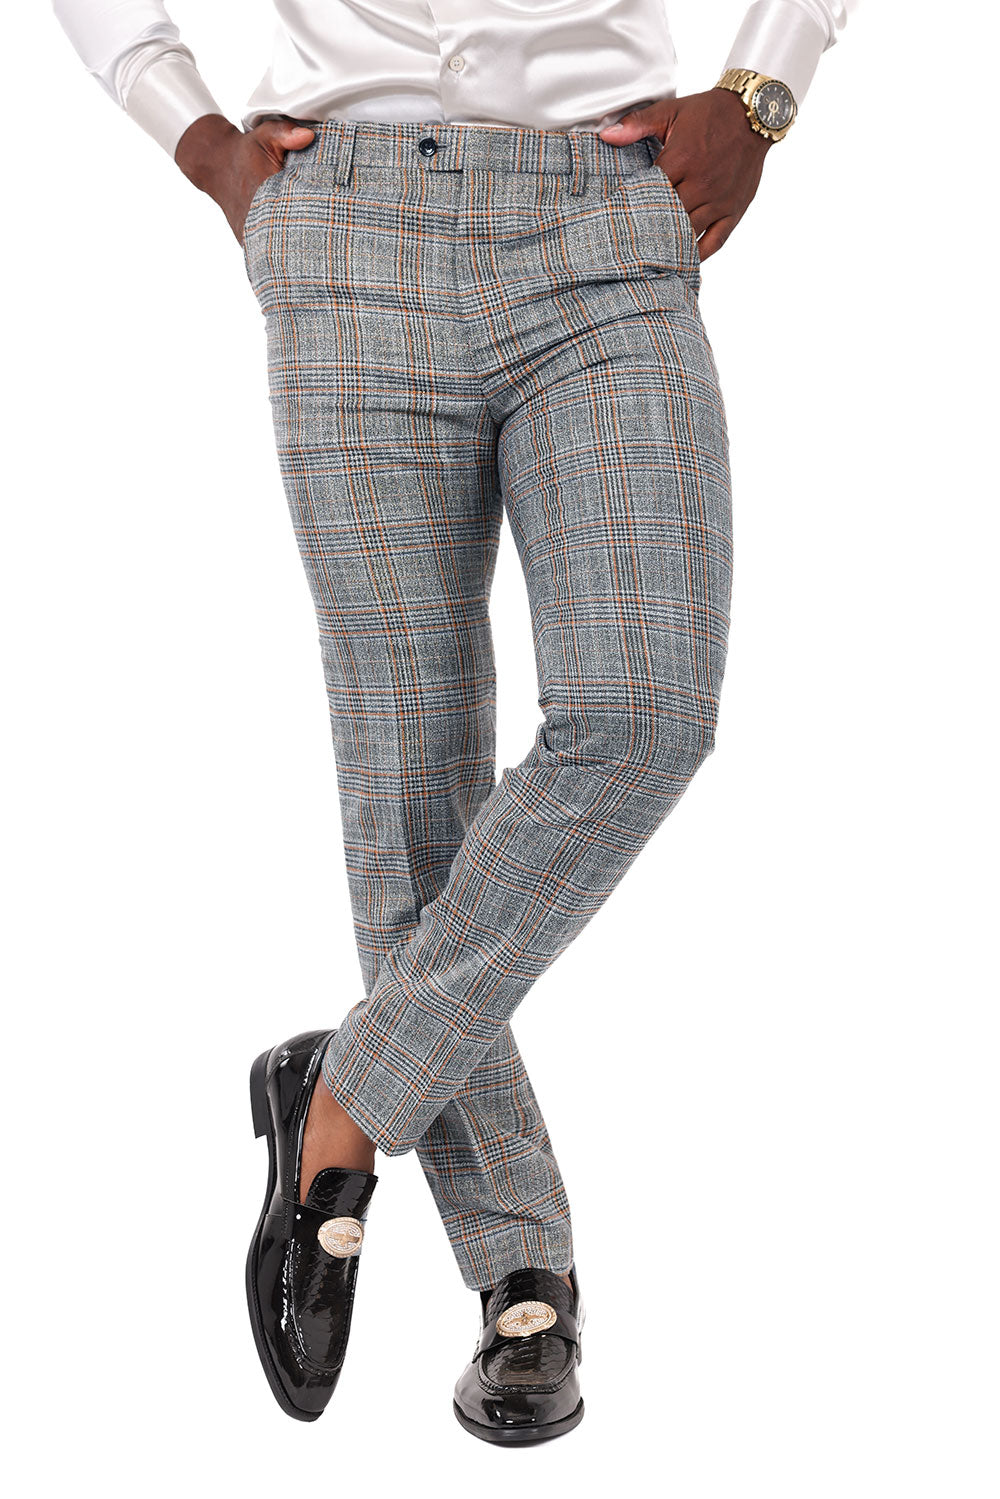 Barabas Men's Printed Checkered Plaid Design Chino Pants 2CP188 Mocha Silver